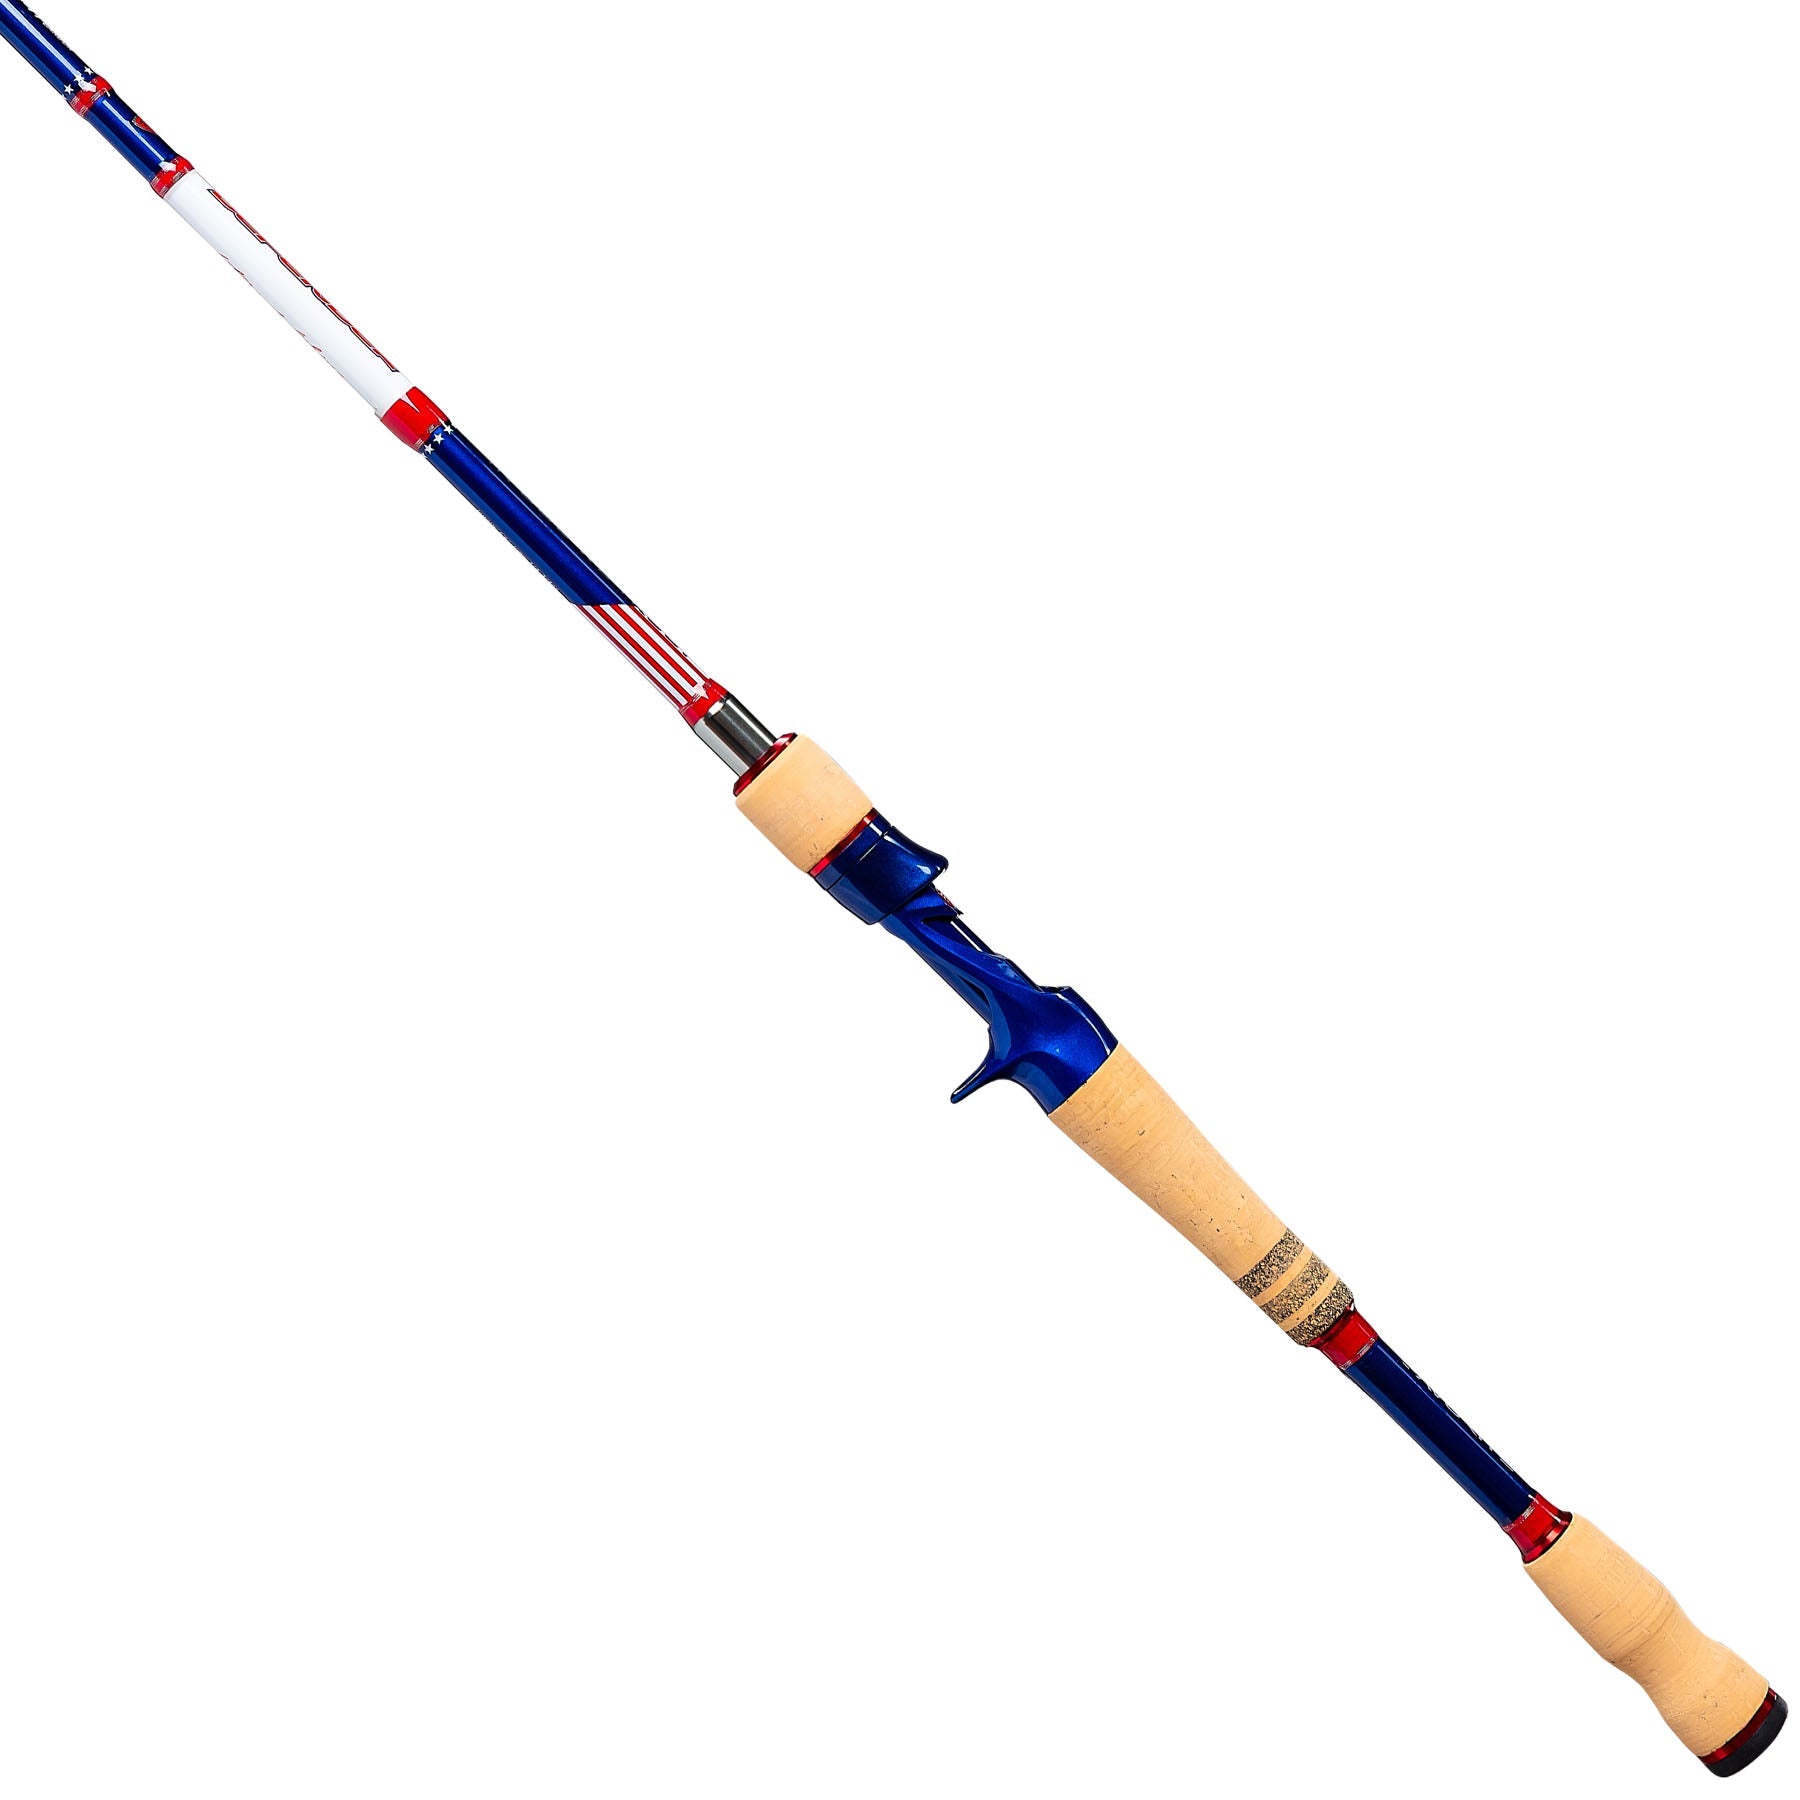 13 Fishing - Rely Black - Baitcast Fishing Rods 7'3 H (Heavy)